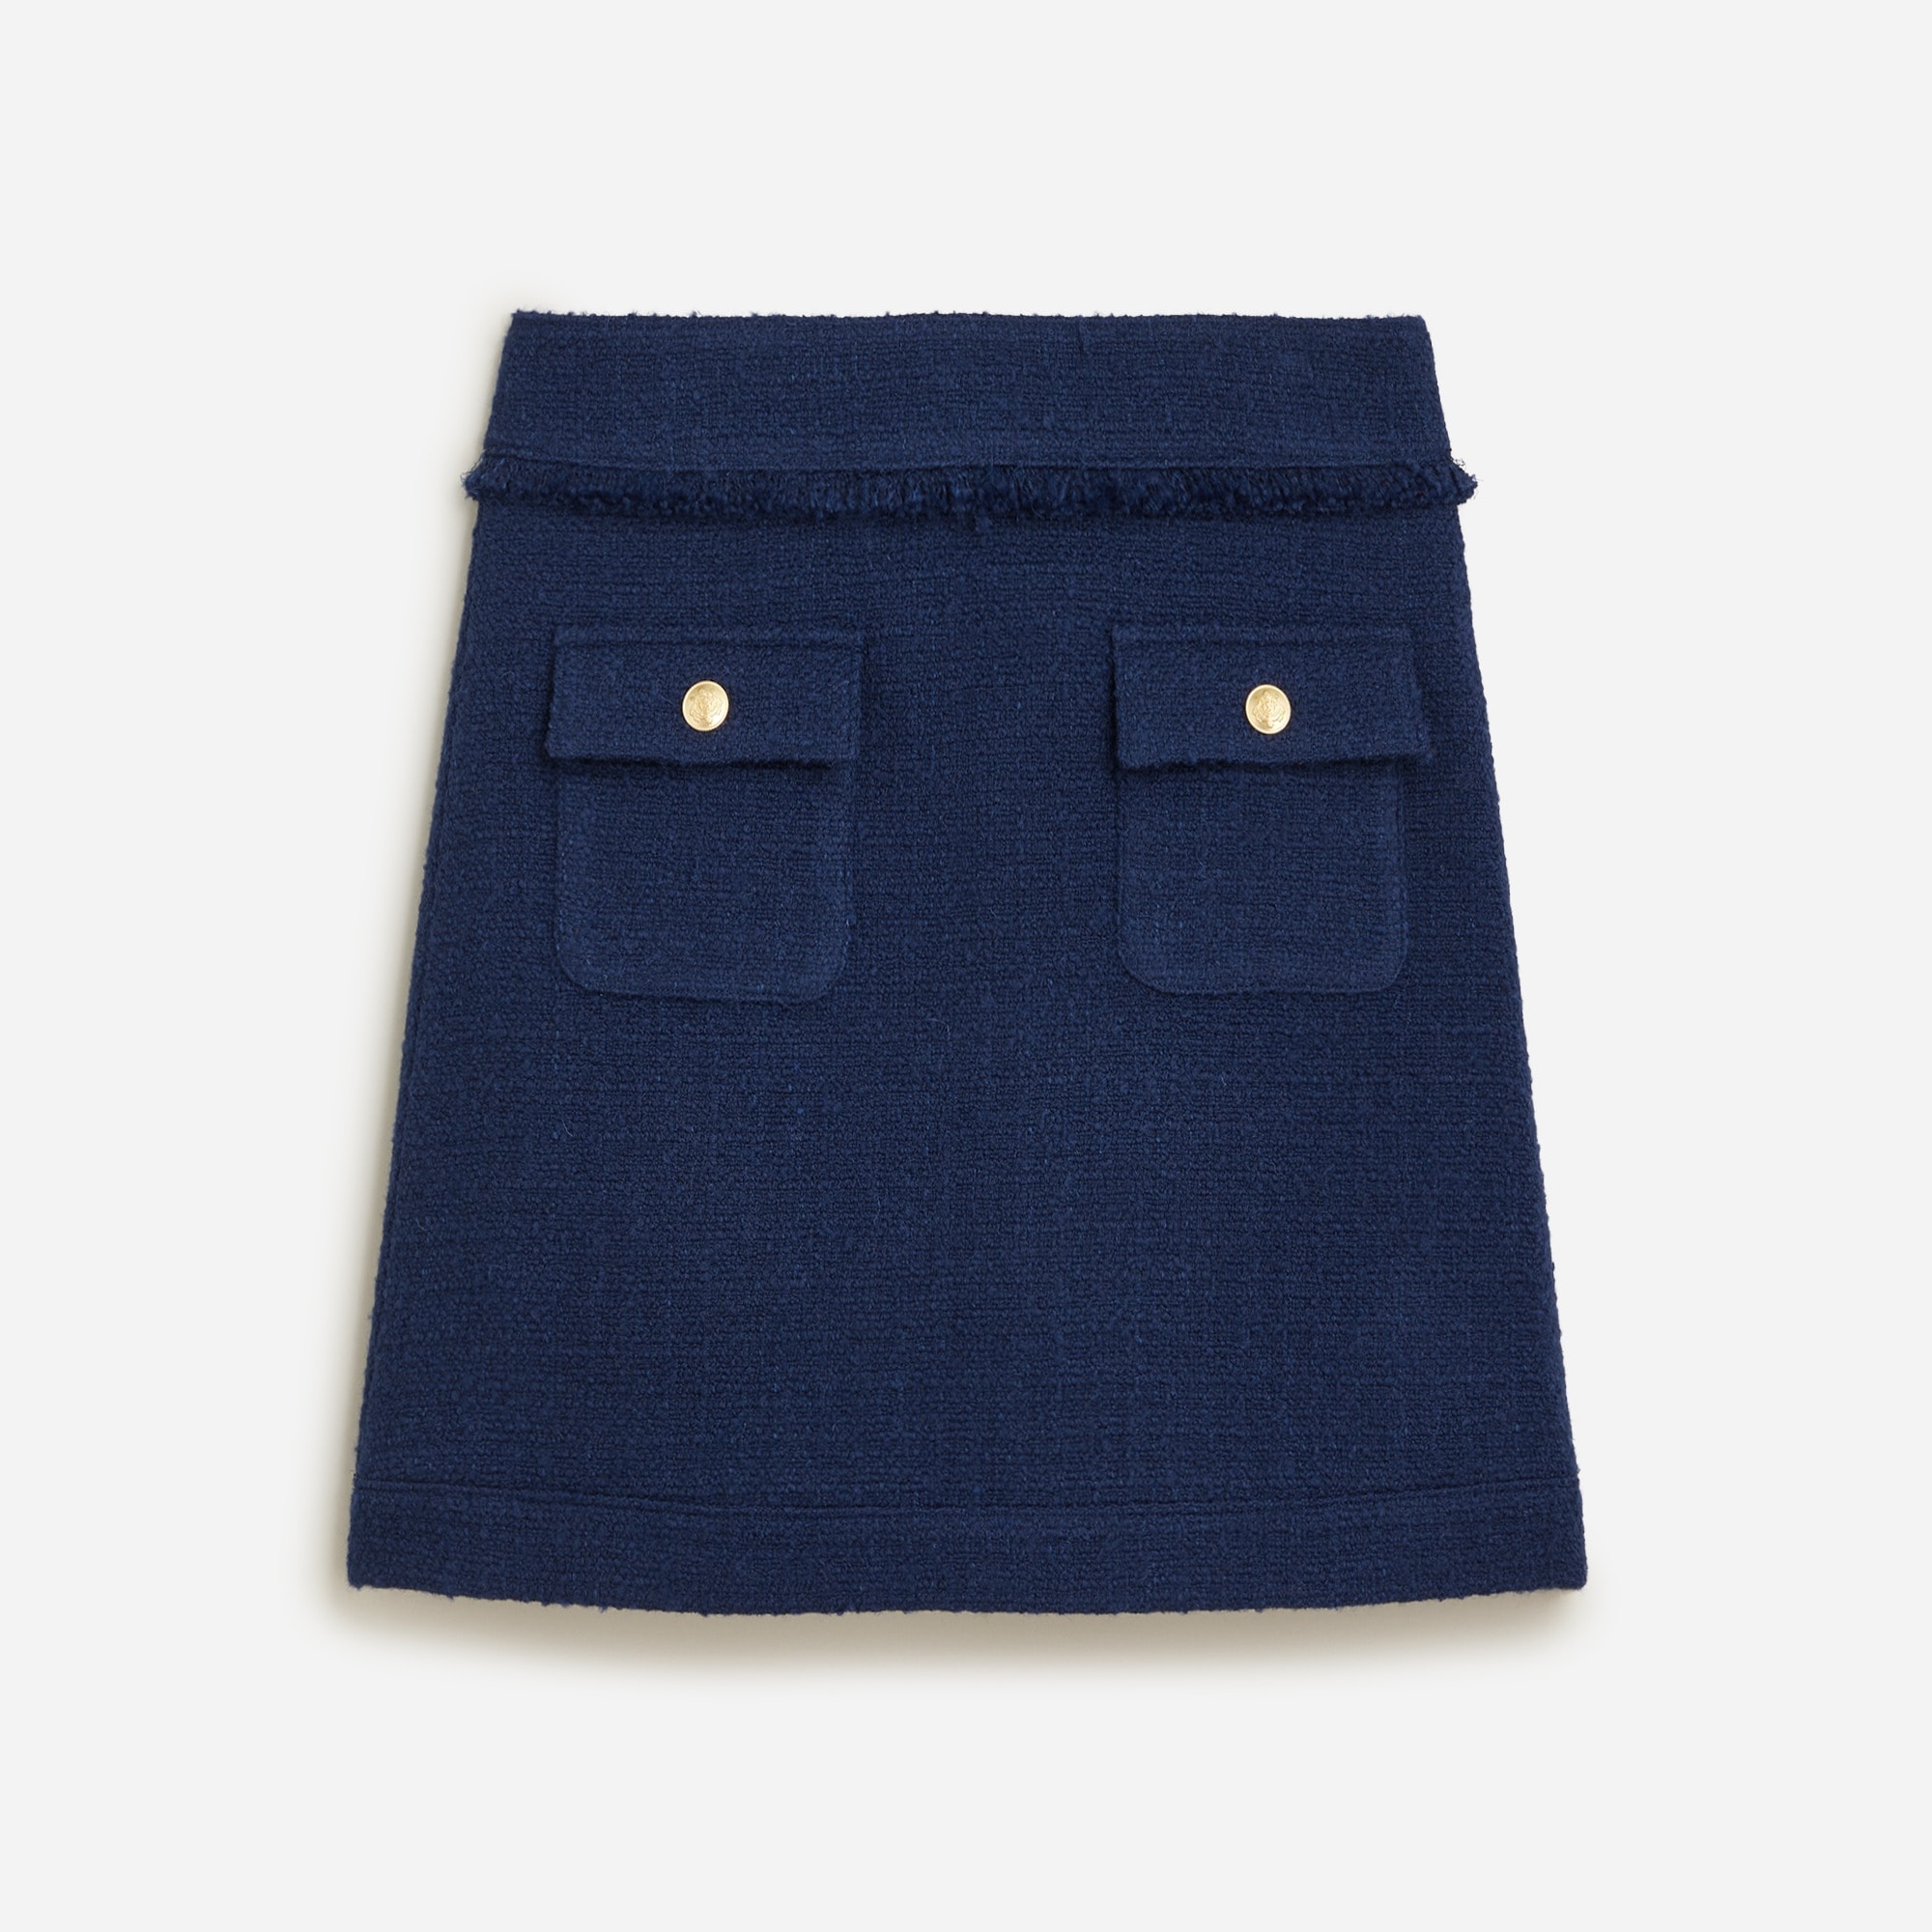  Patch-pocket mini skirt in tweed